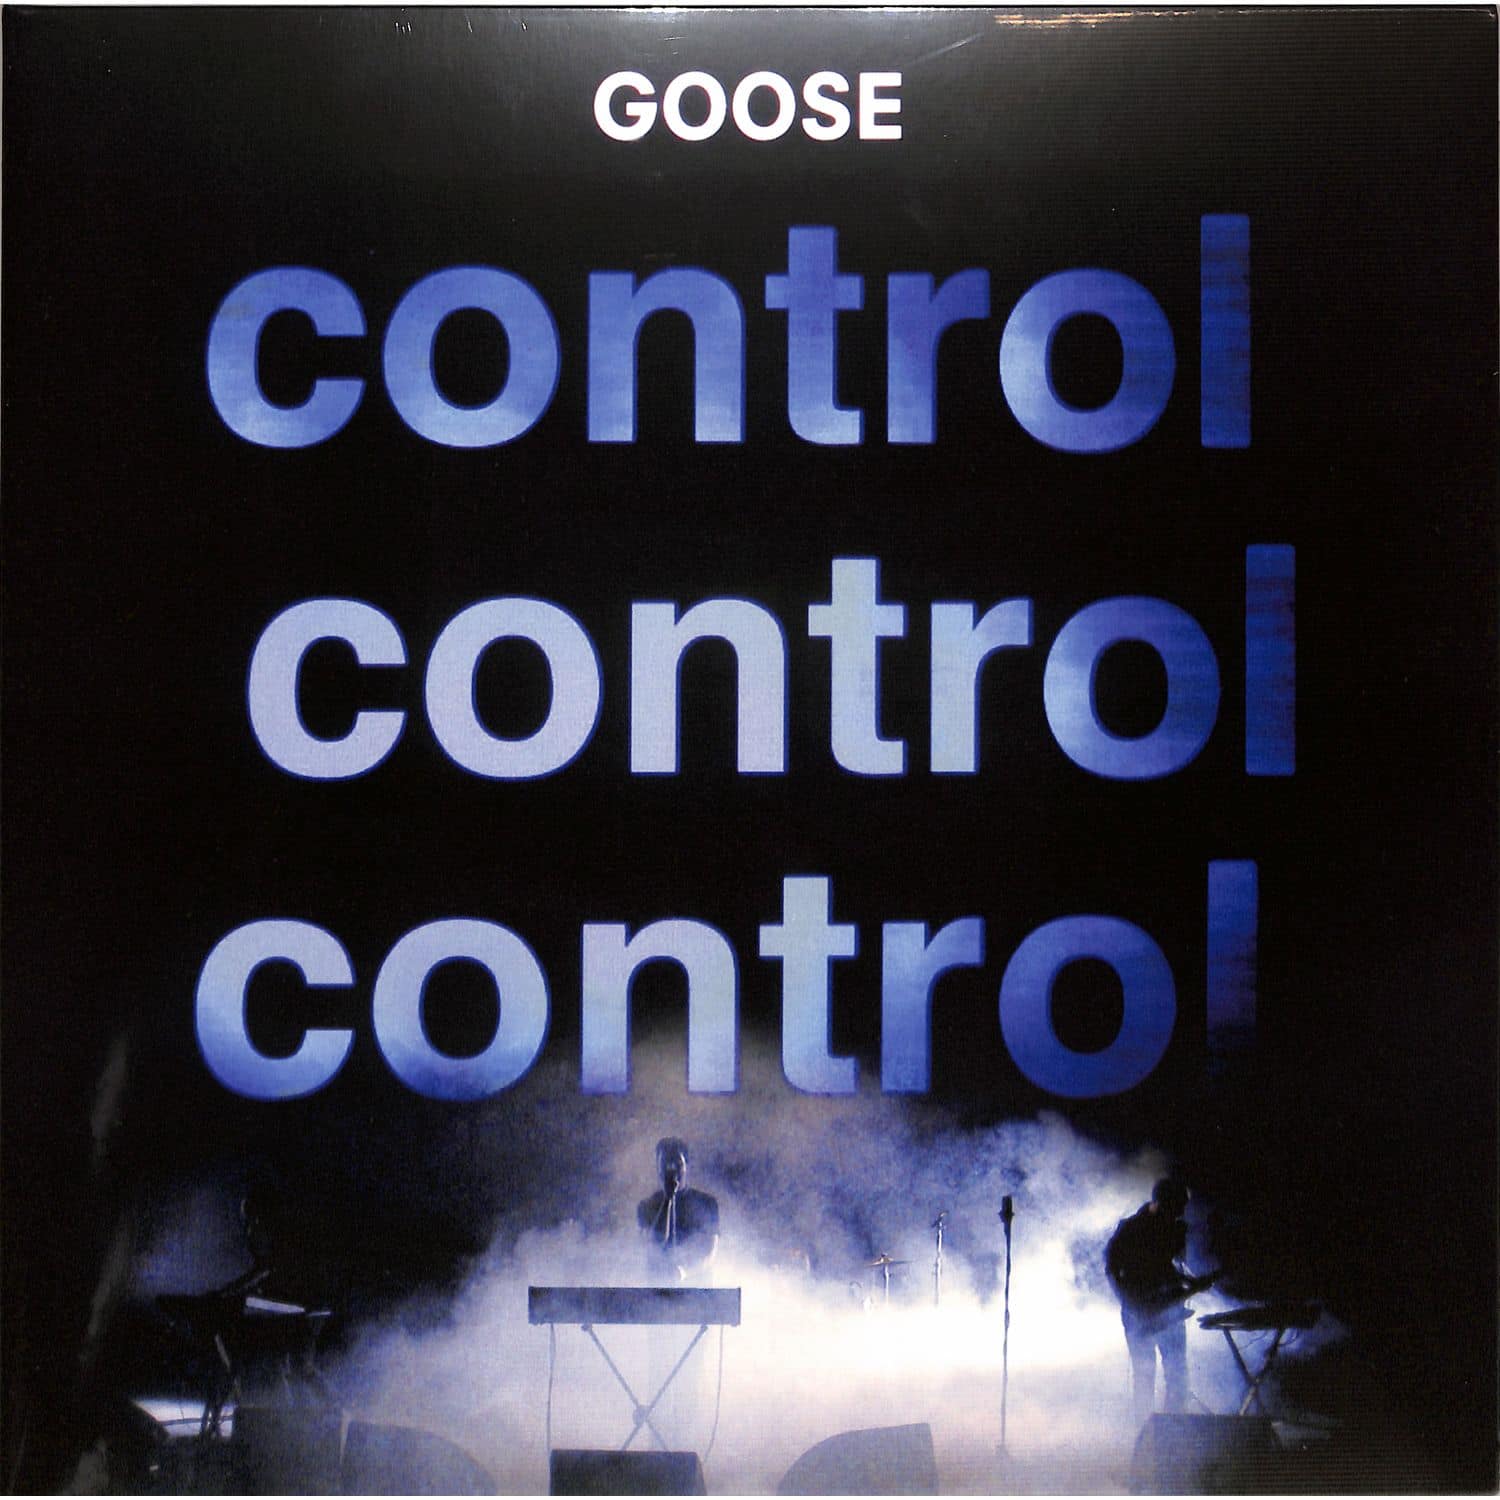 Goose - CONTROL CONTROL CONTROL